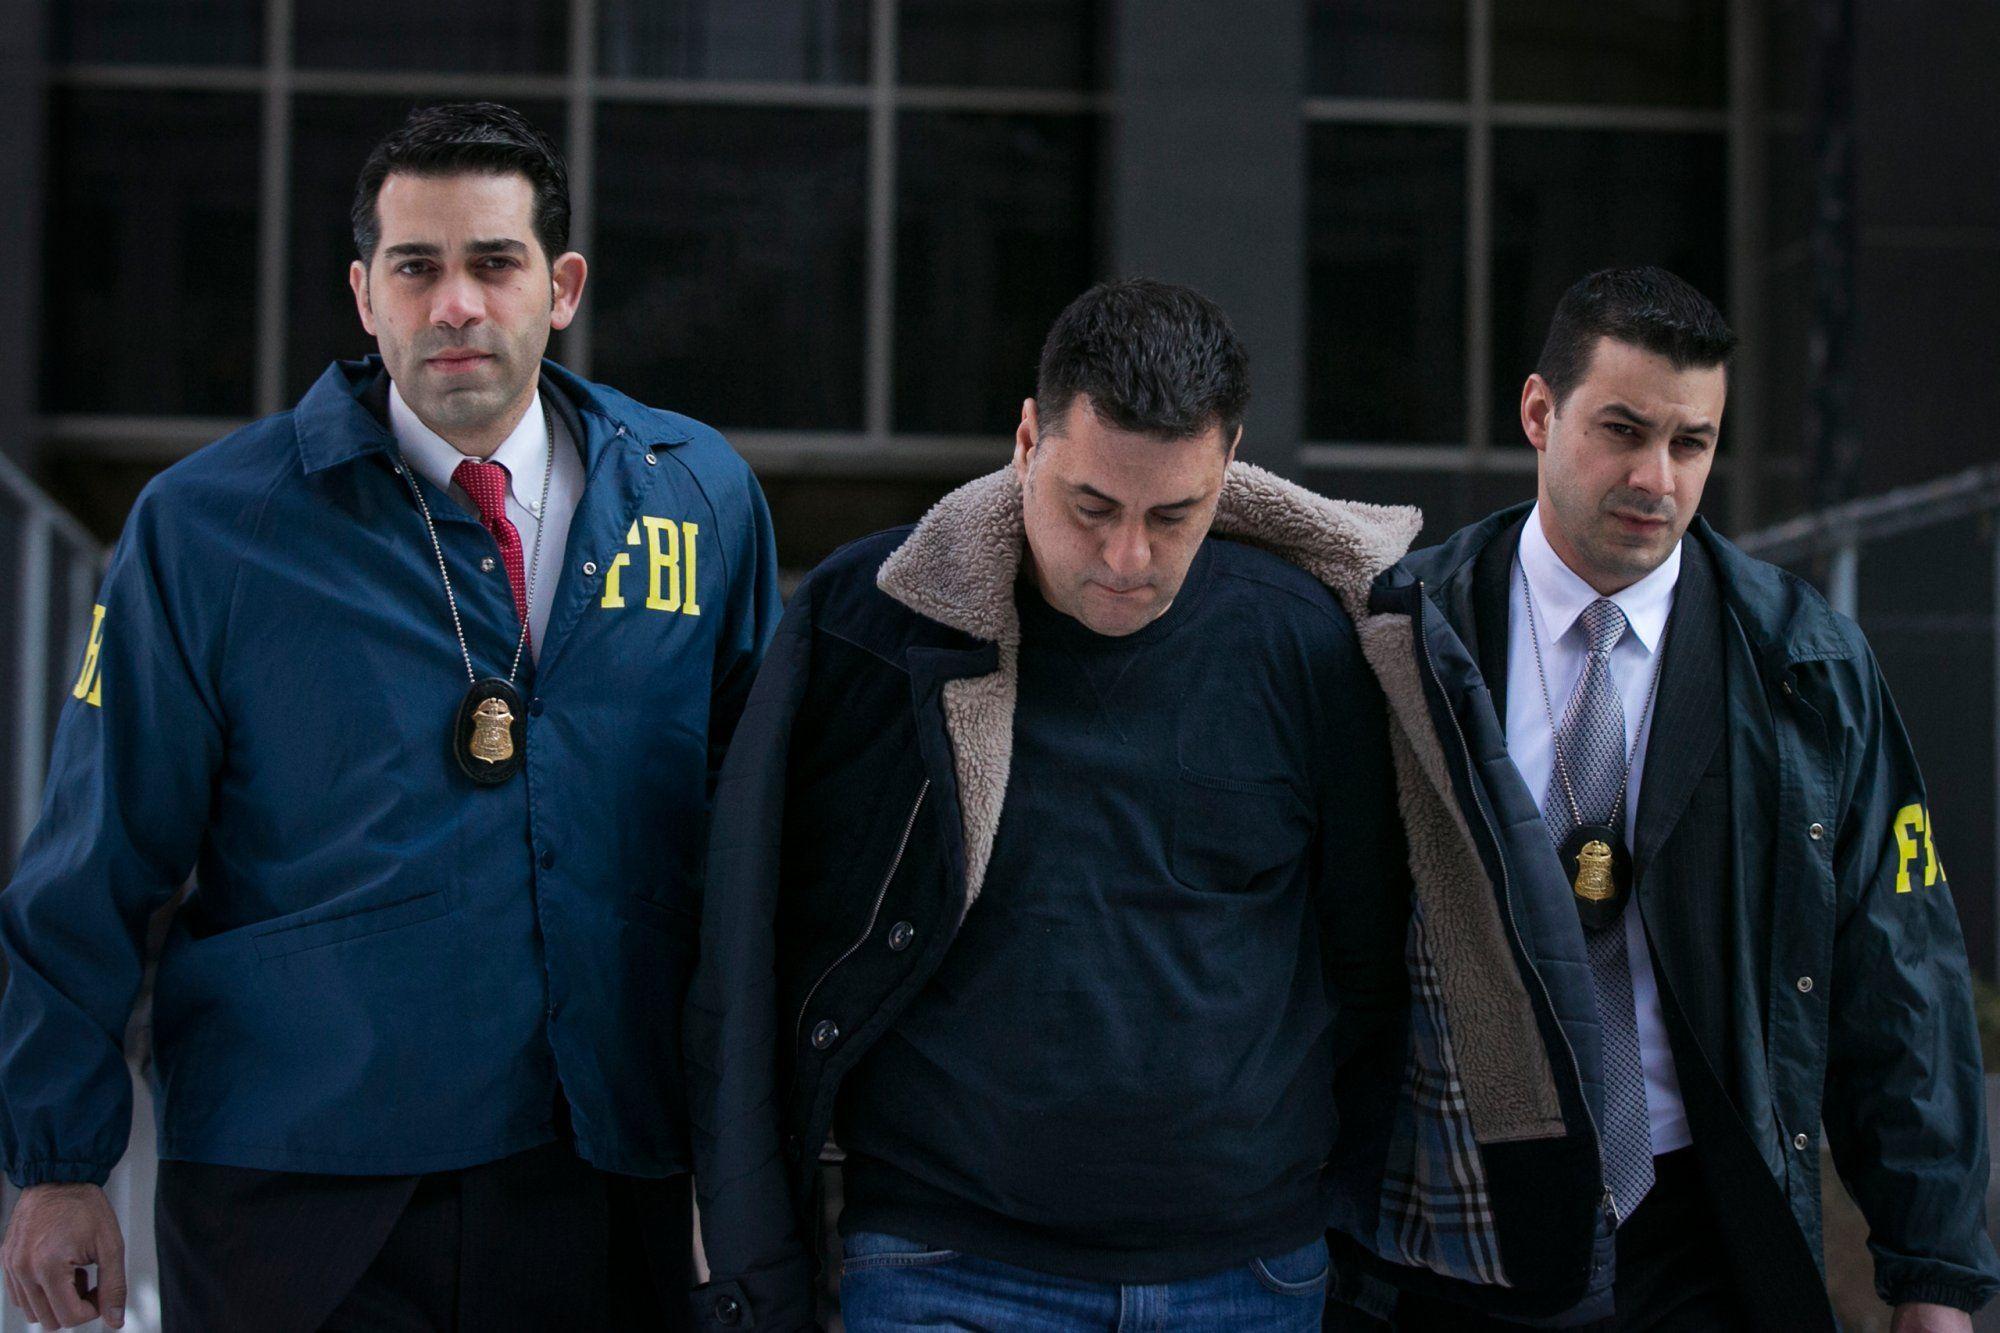 Undercover FBI Logo - Mob International Drug Kingpin: The Undercover FBI Agent Made Me Do ...